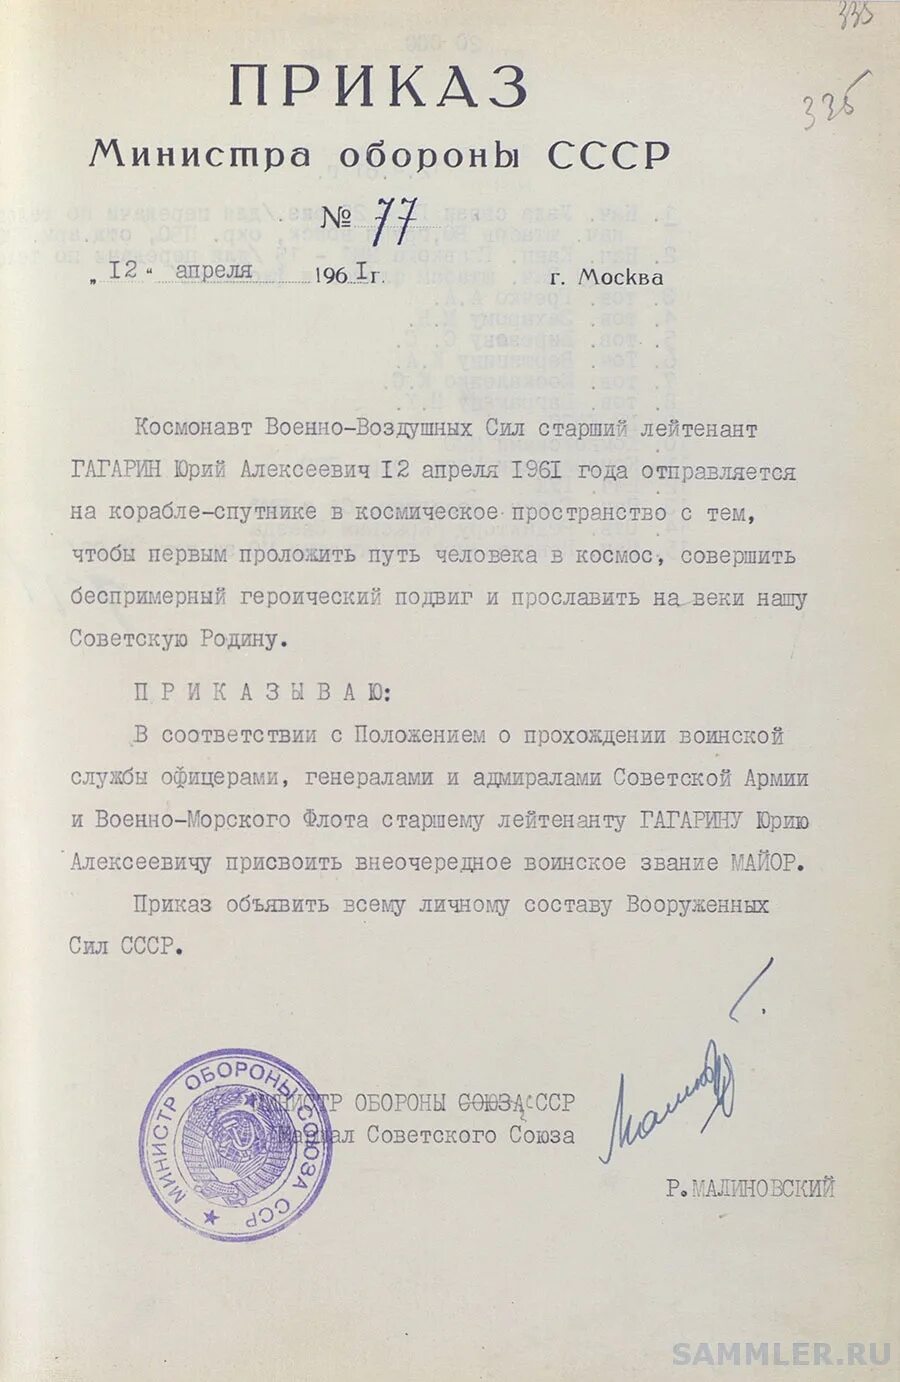 Приказ Министерства обороны СССР от 12.04.1961 года. Приказ Министерства обороны СССР от 12 апреля 1961 года.